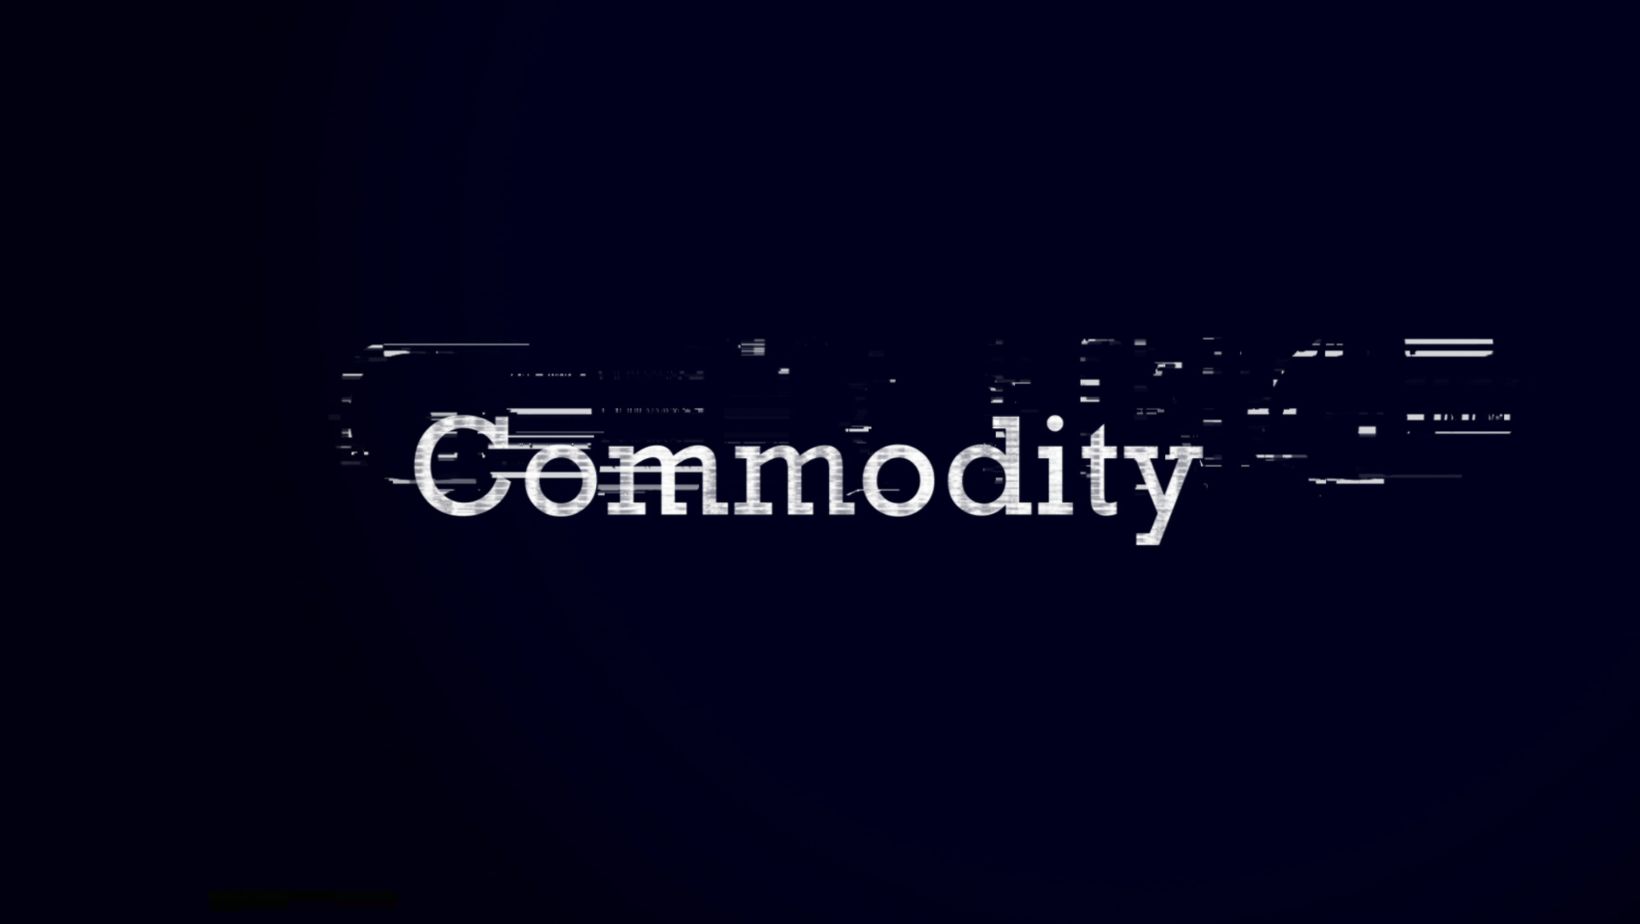 investing.com commodities